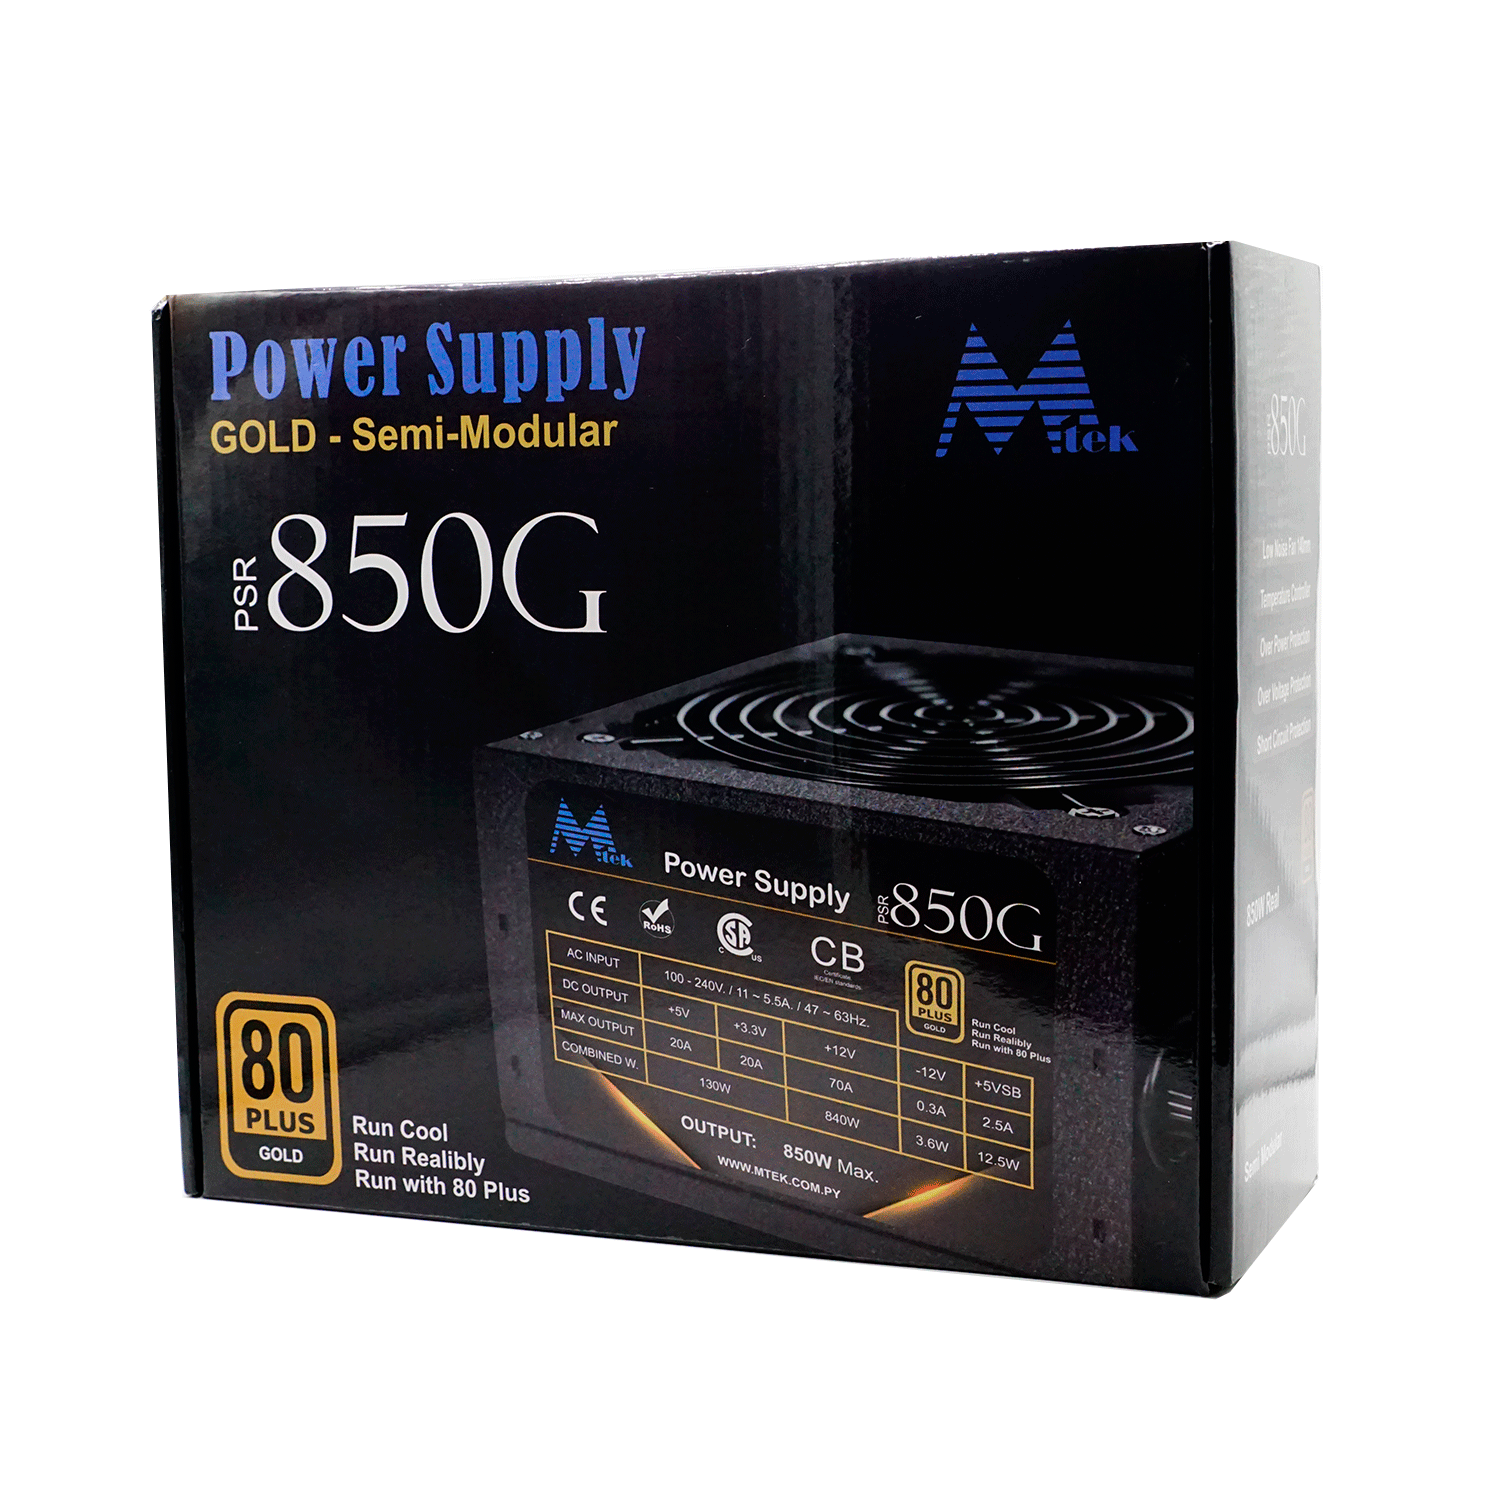 Fonte ATX 850W MTEK PSR-850G 80 Gold Semi Modular (850 REAL)